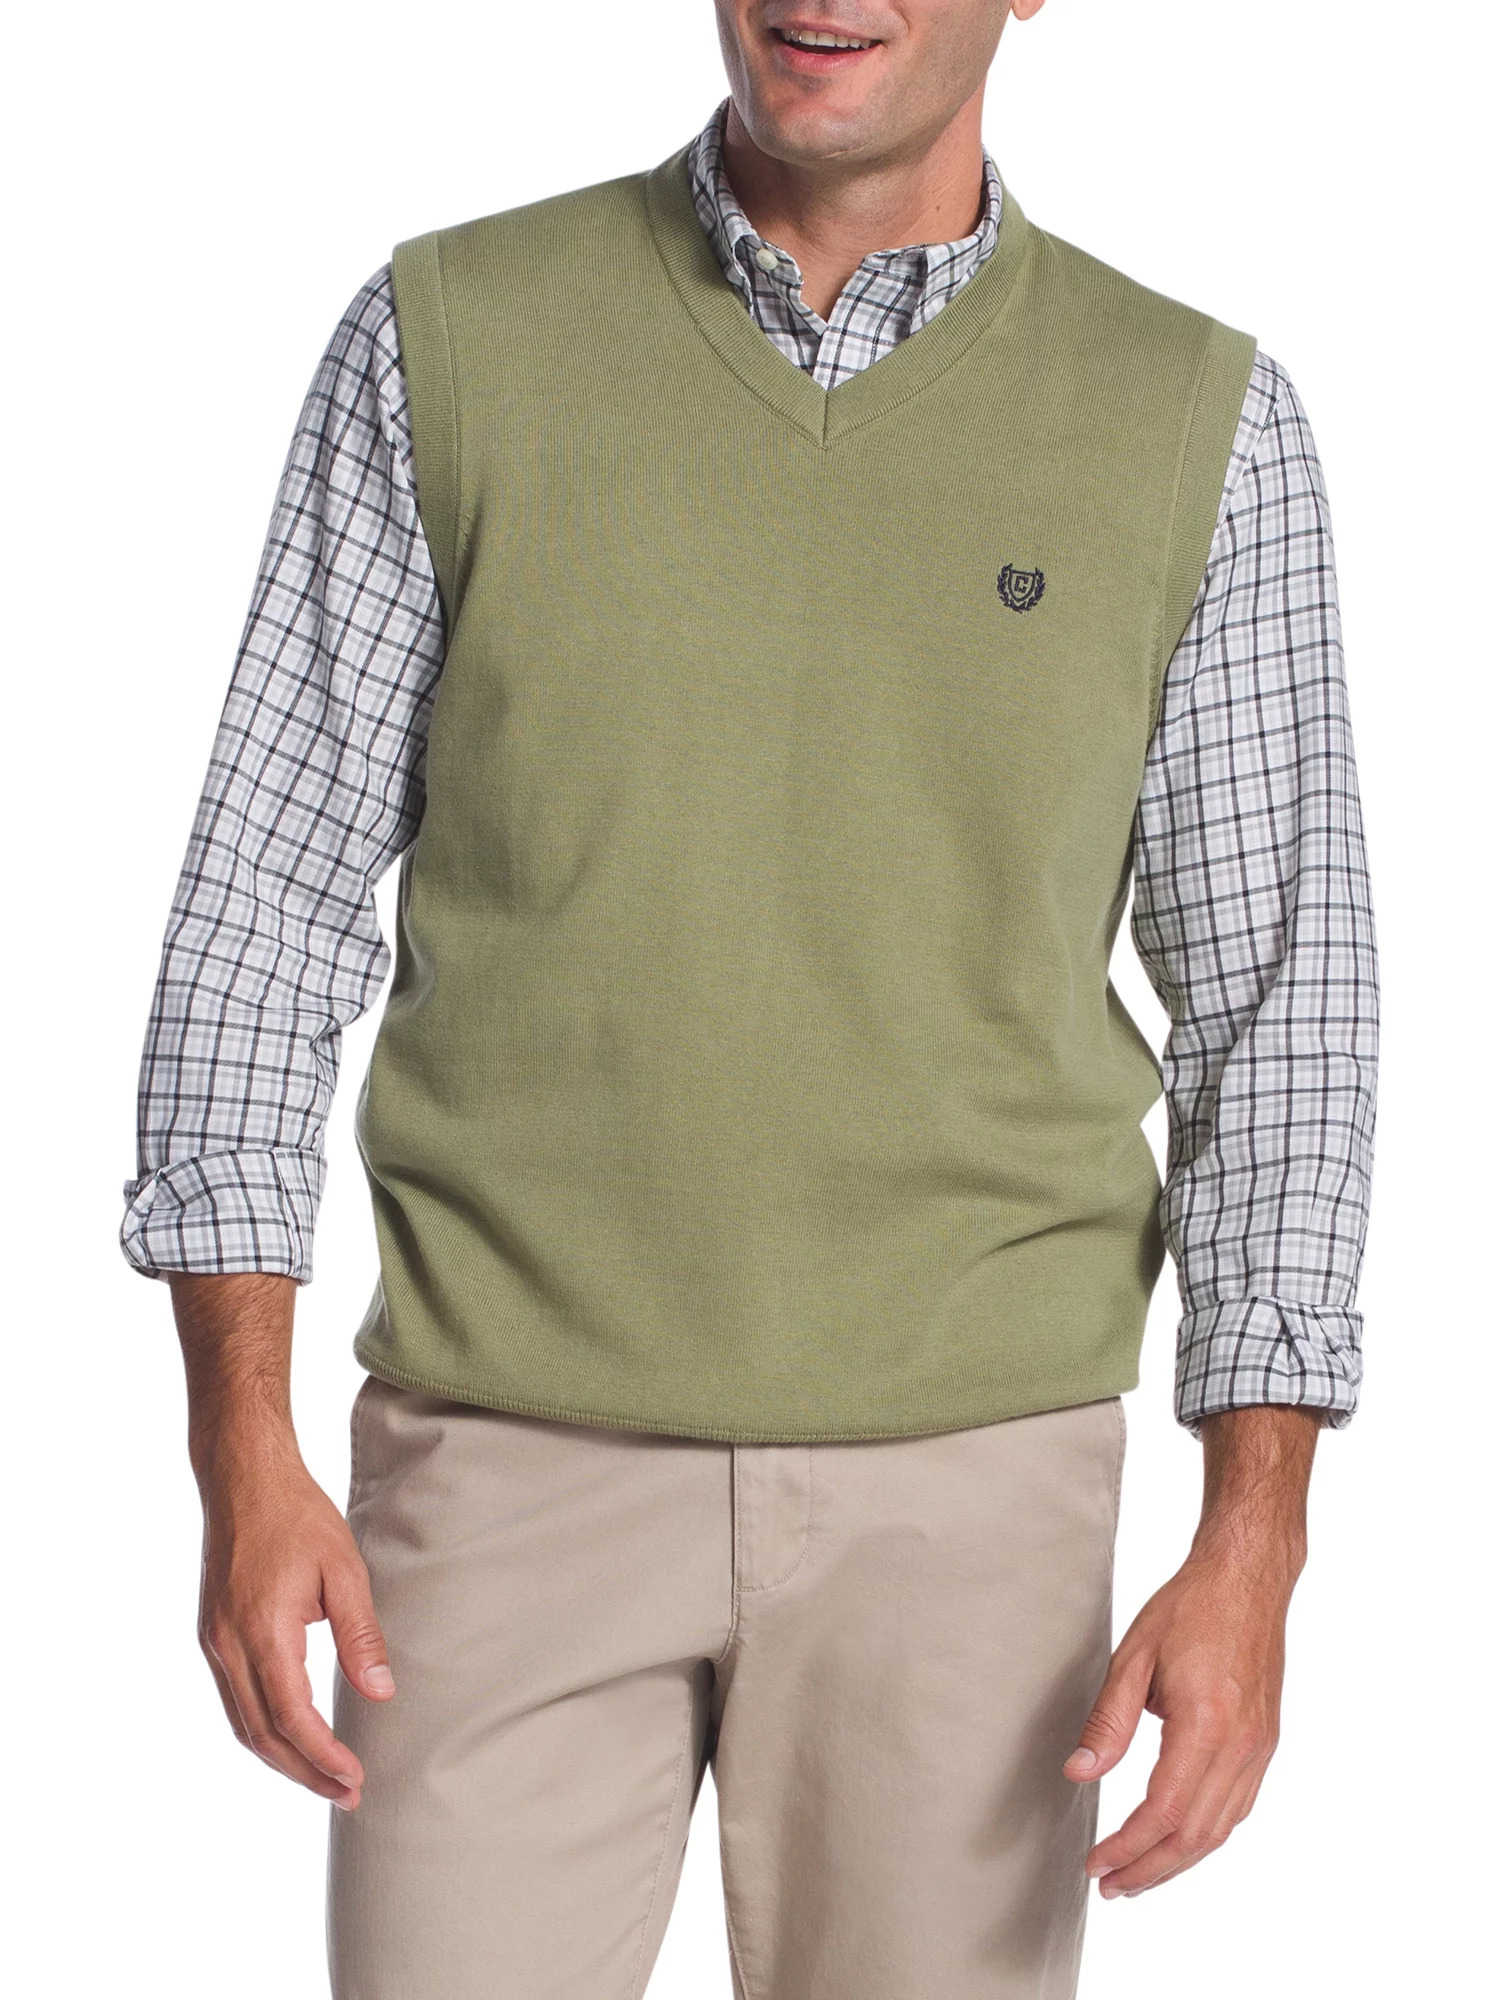 Sweater vest color coordination